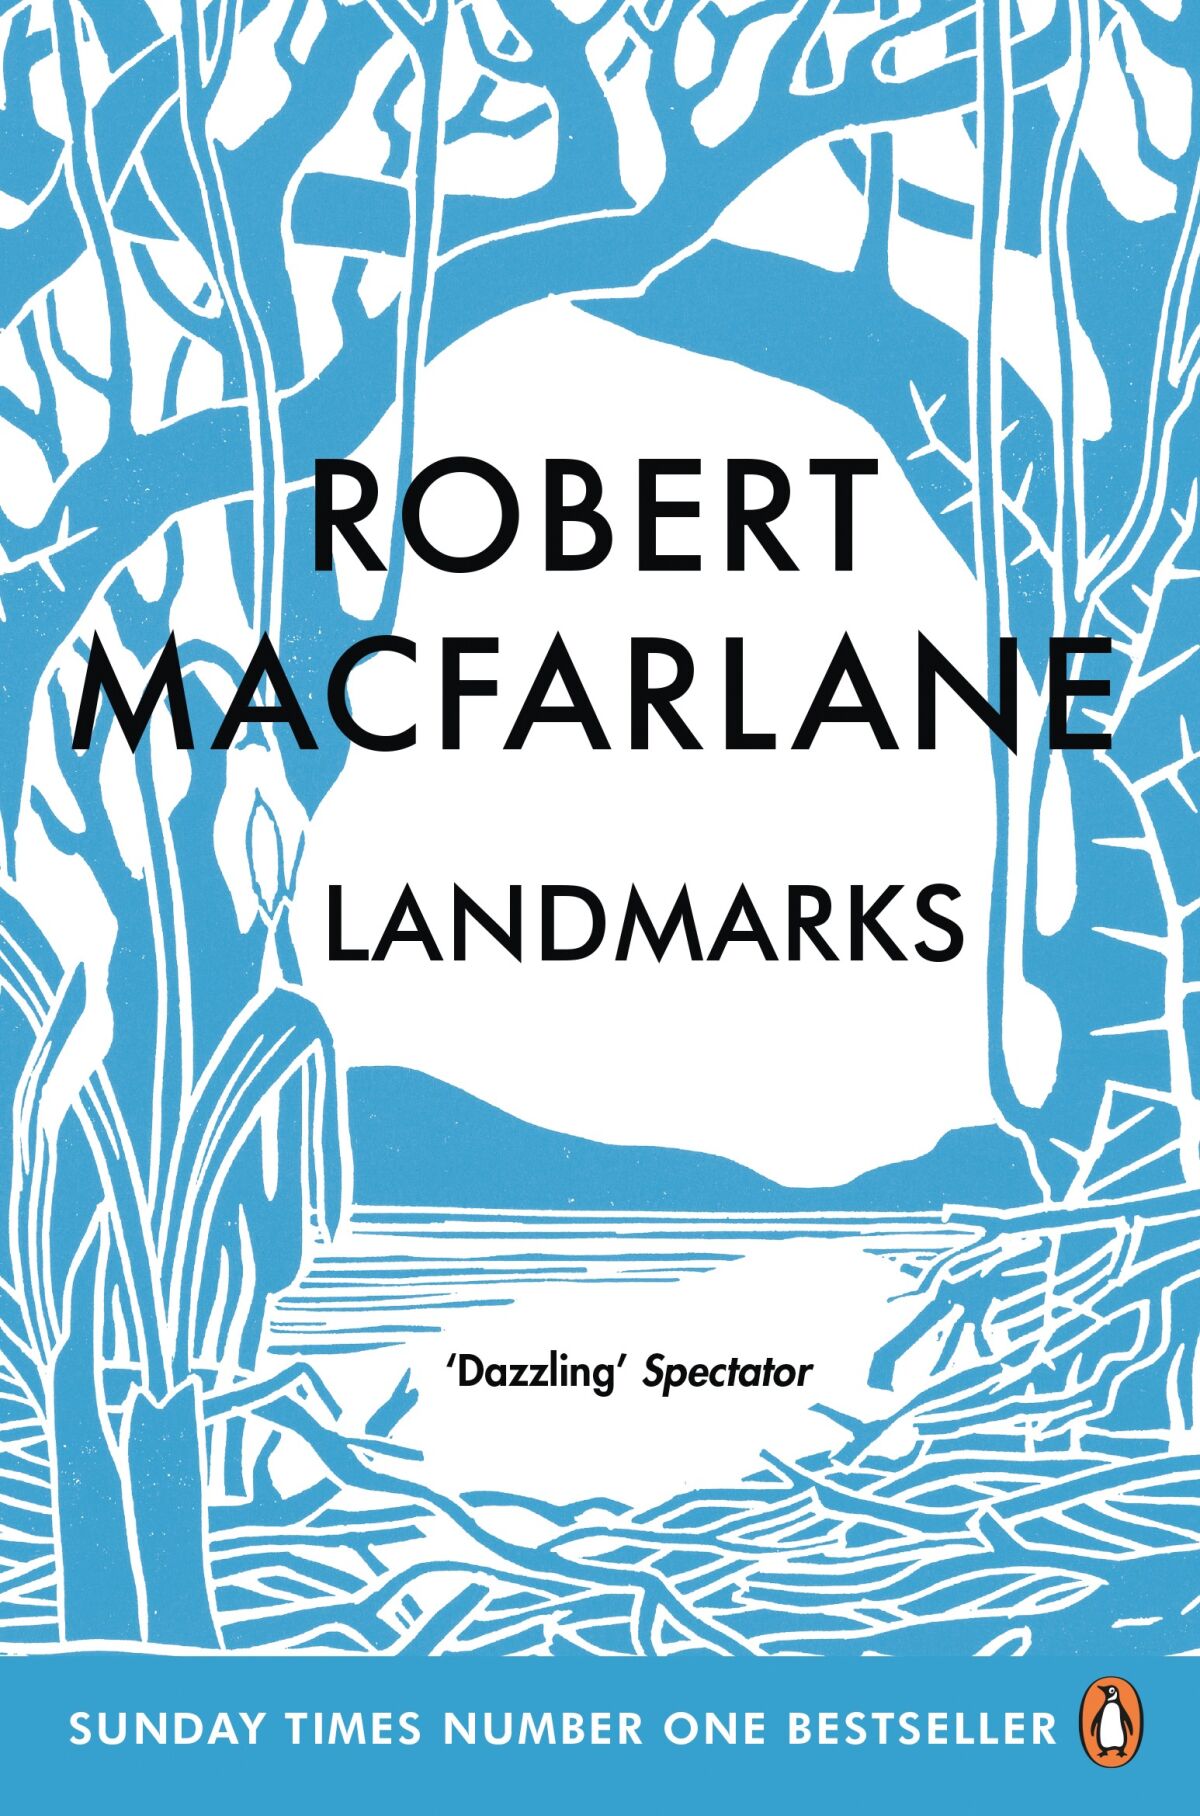 Cover of "Landmarks" by Robert MacFarlane